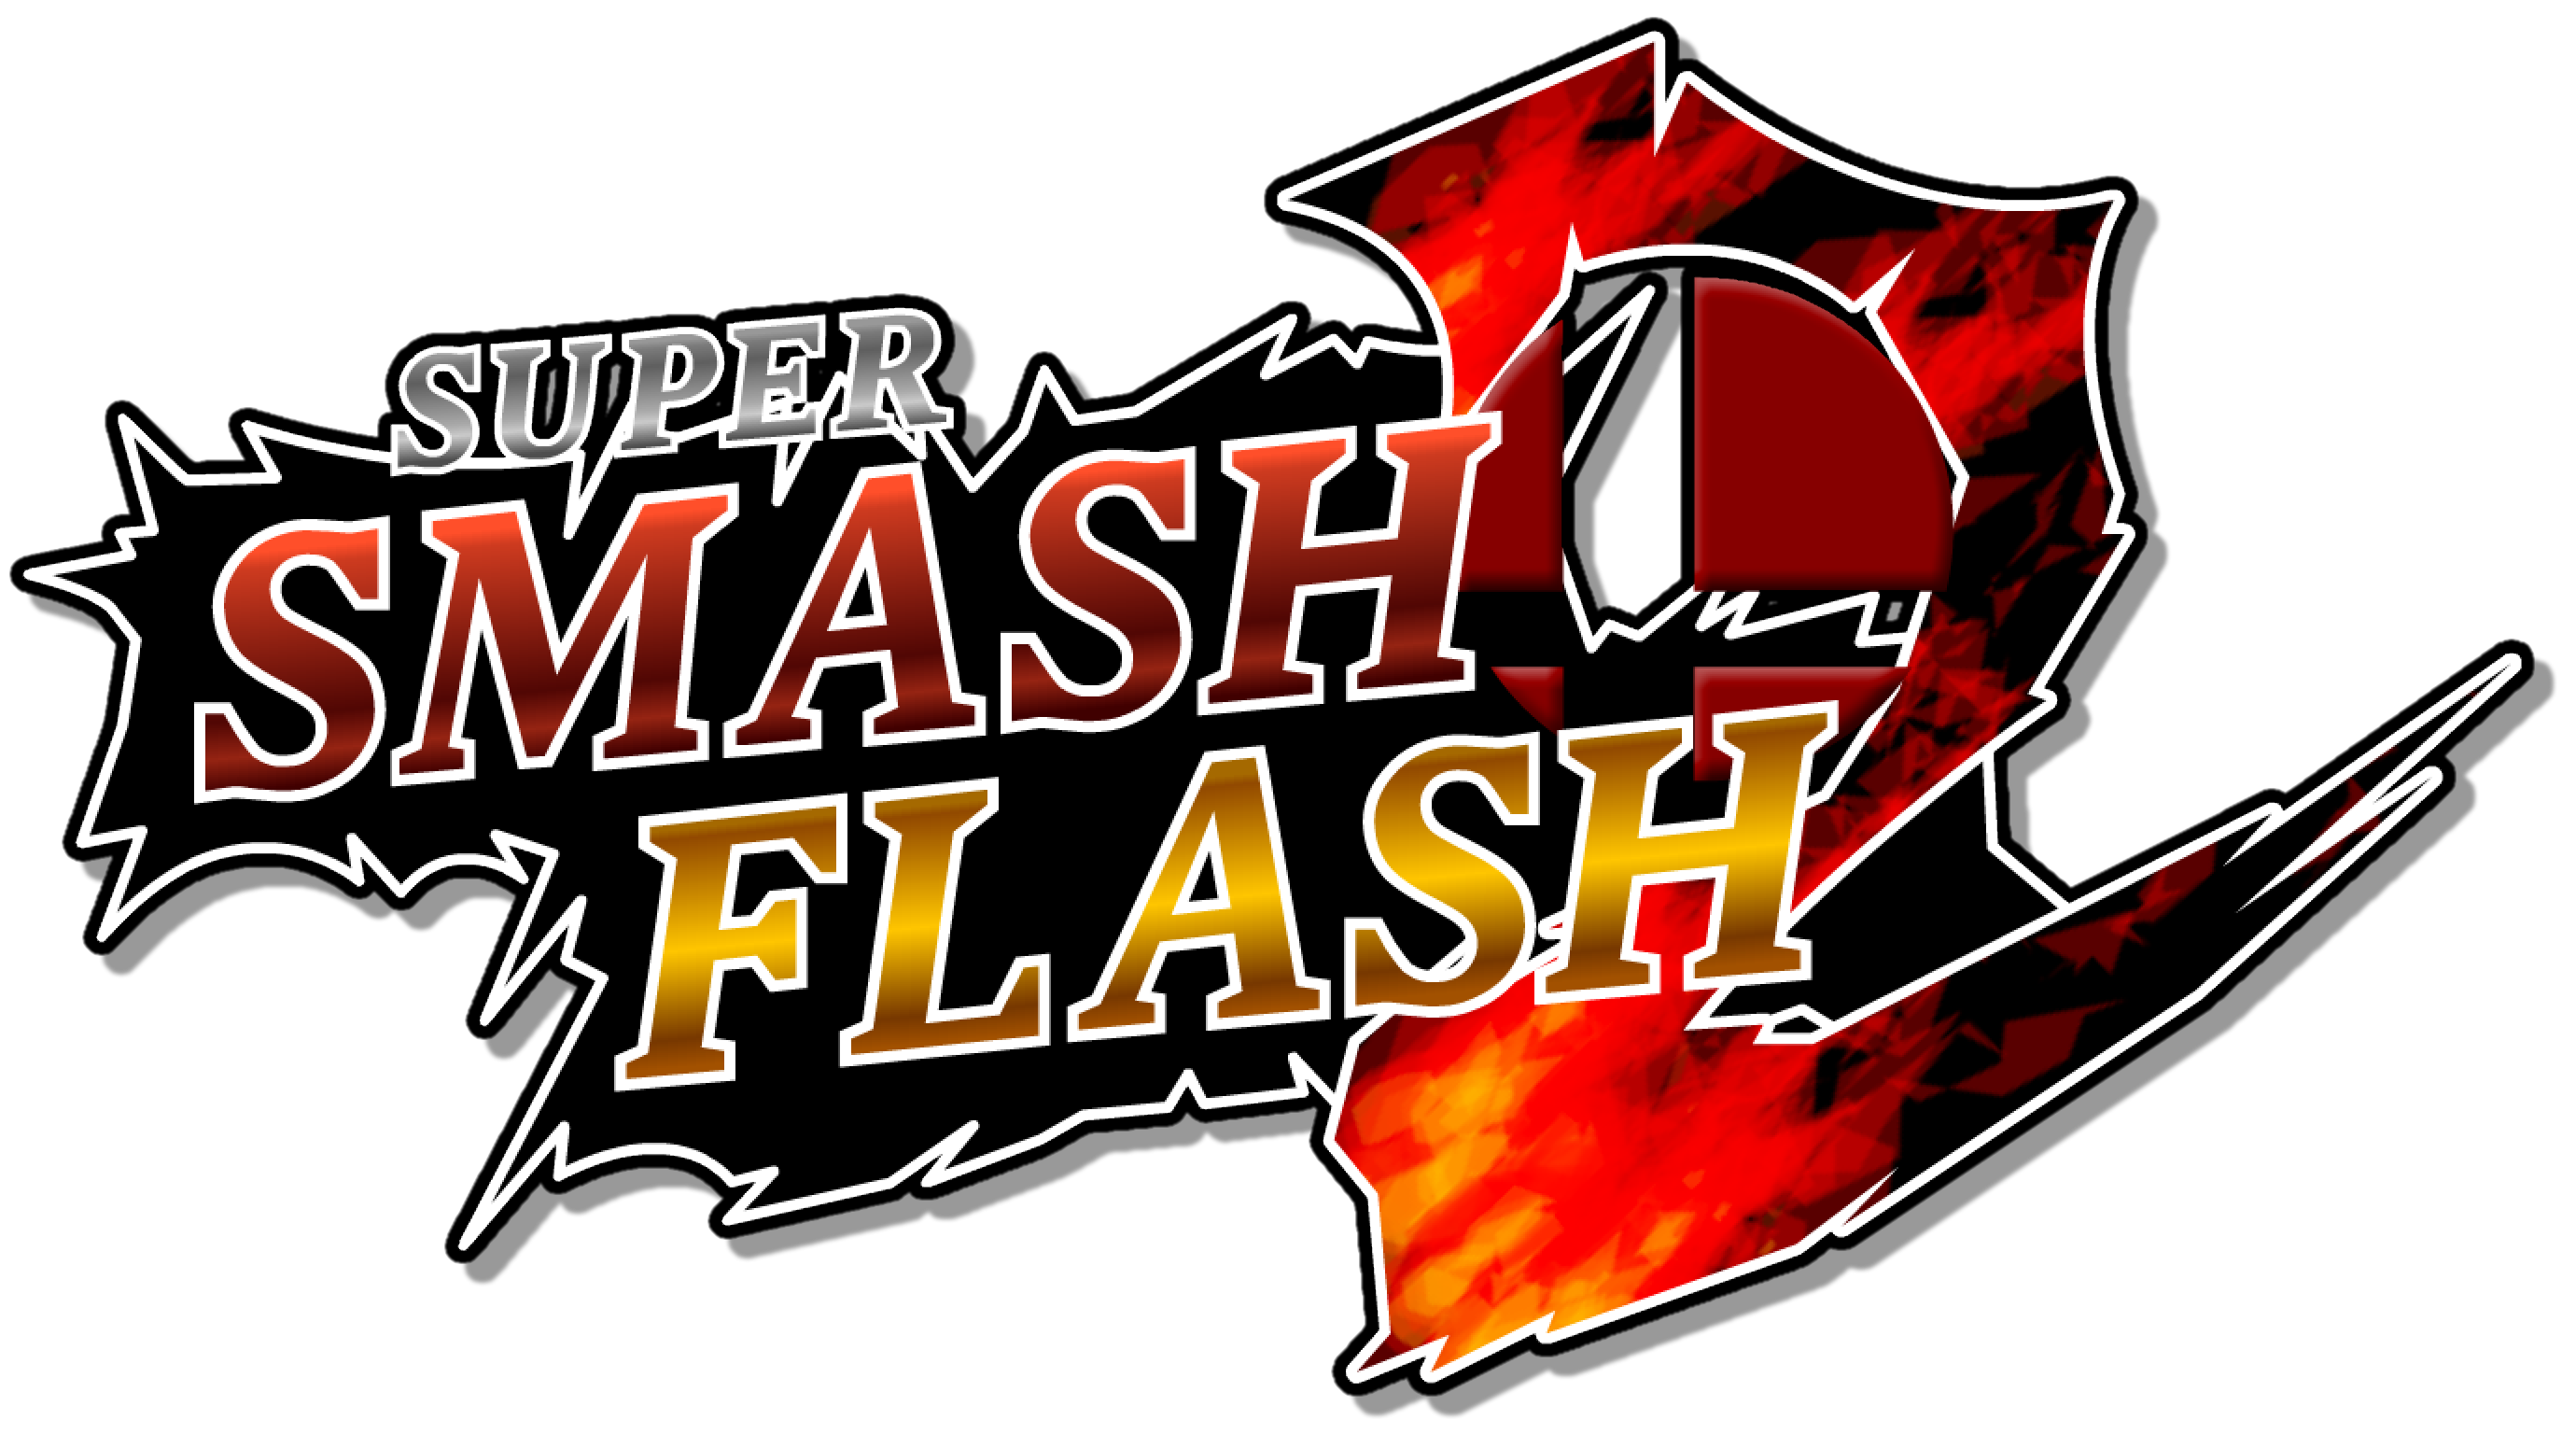 super smash flash 2 mods beta